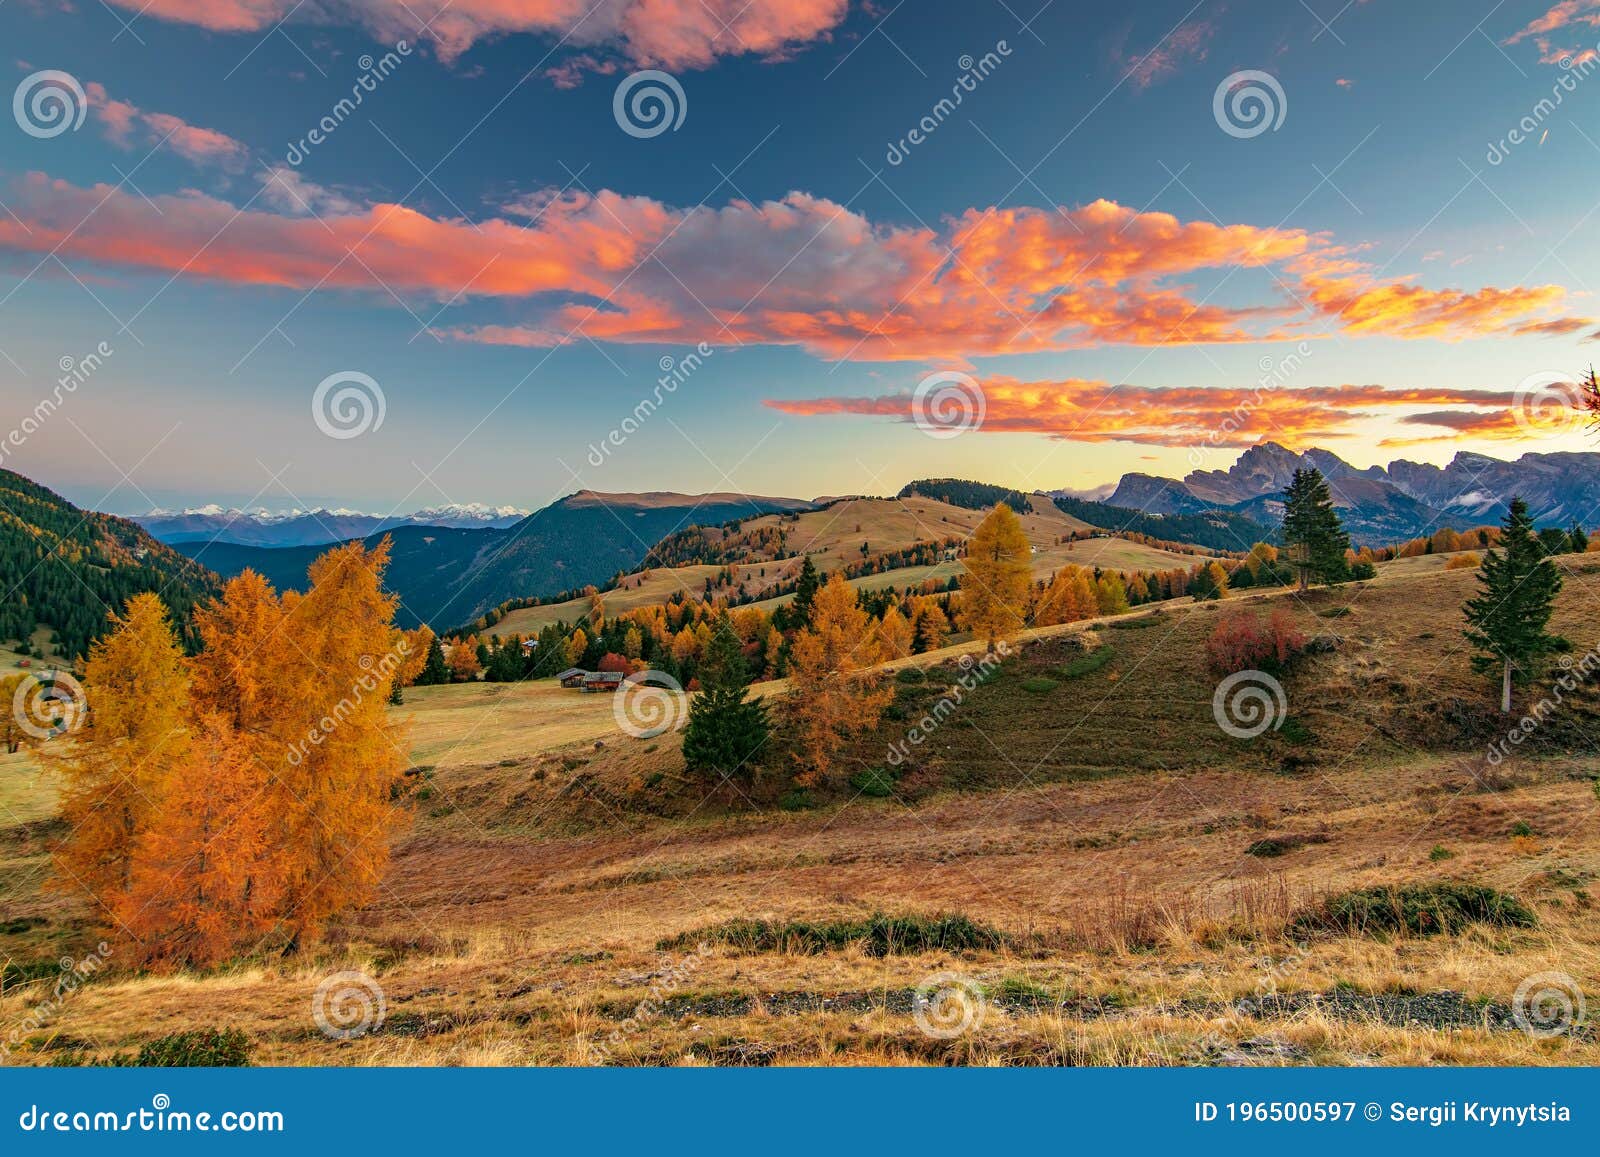 Sunrise In Alpe Di Siusi, Dolomites In Autumn Stock Photo 